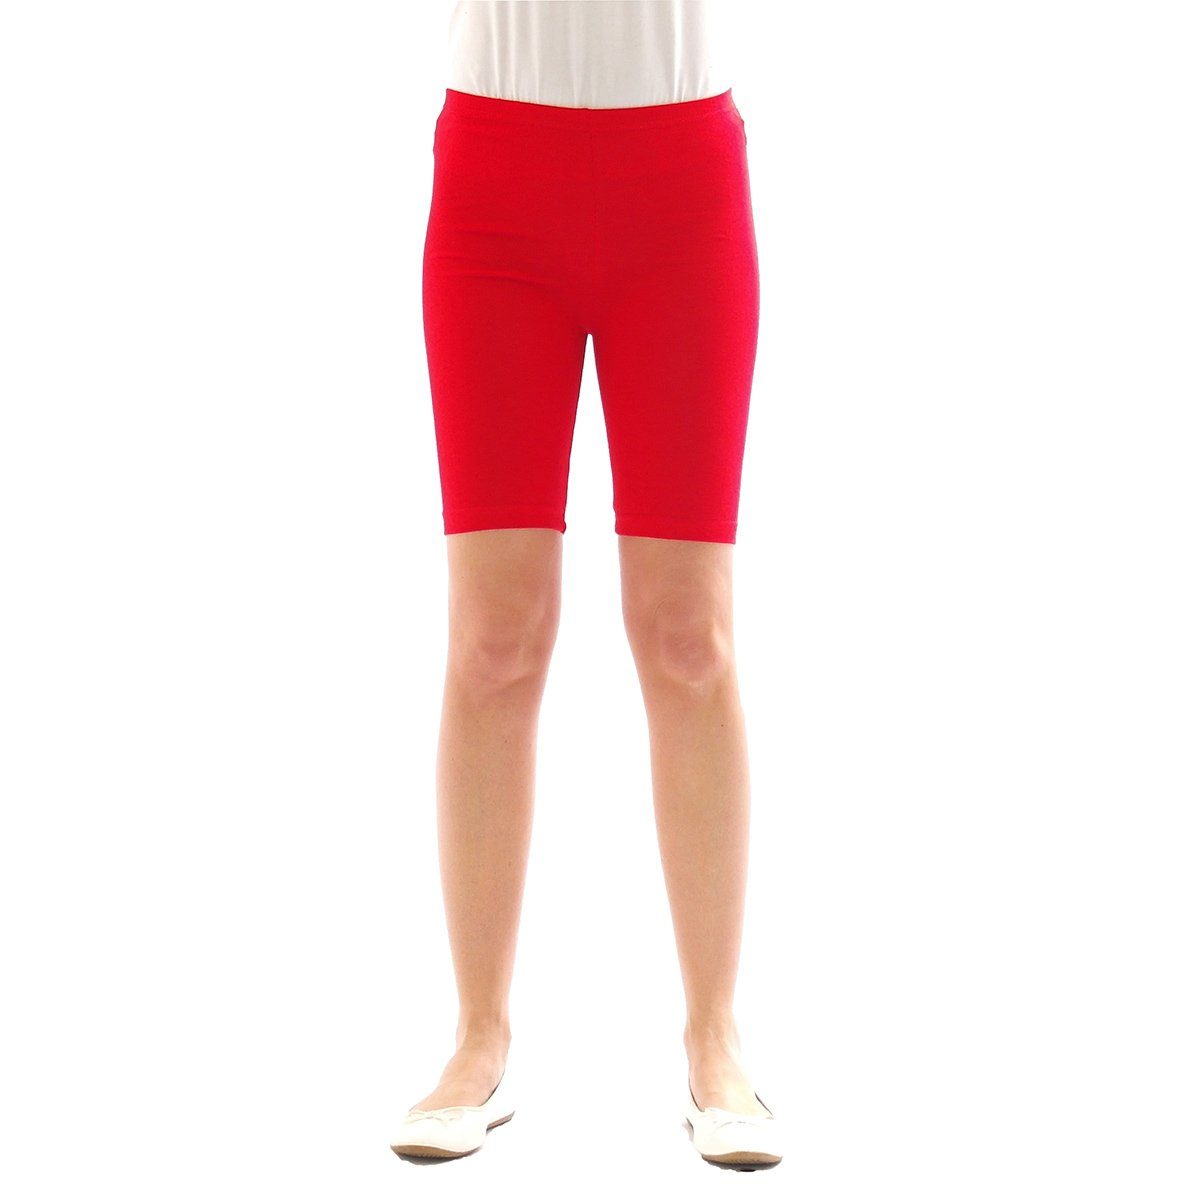 SYS Shorts Kinder Sport rot Pants 1/2 Jungen Baumwolle Mädchen Shorts